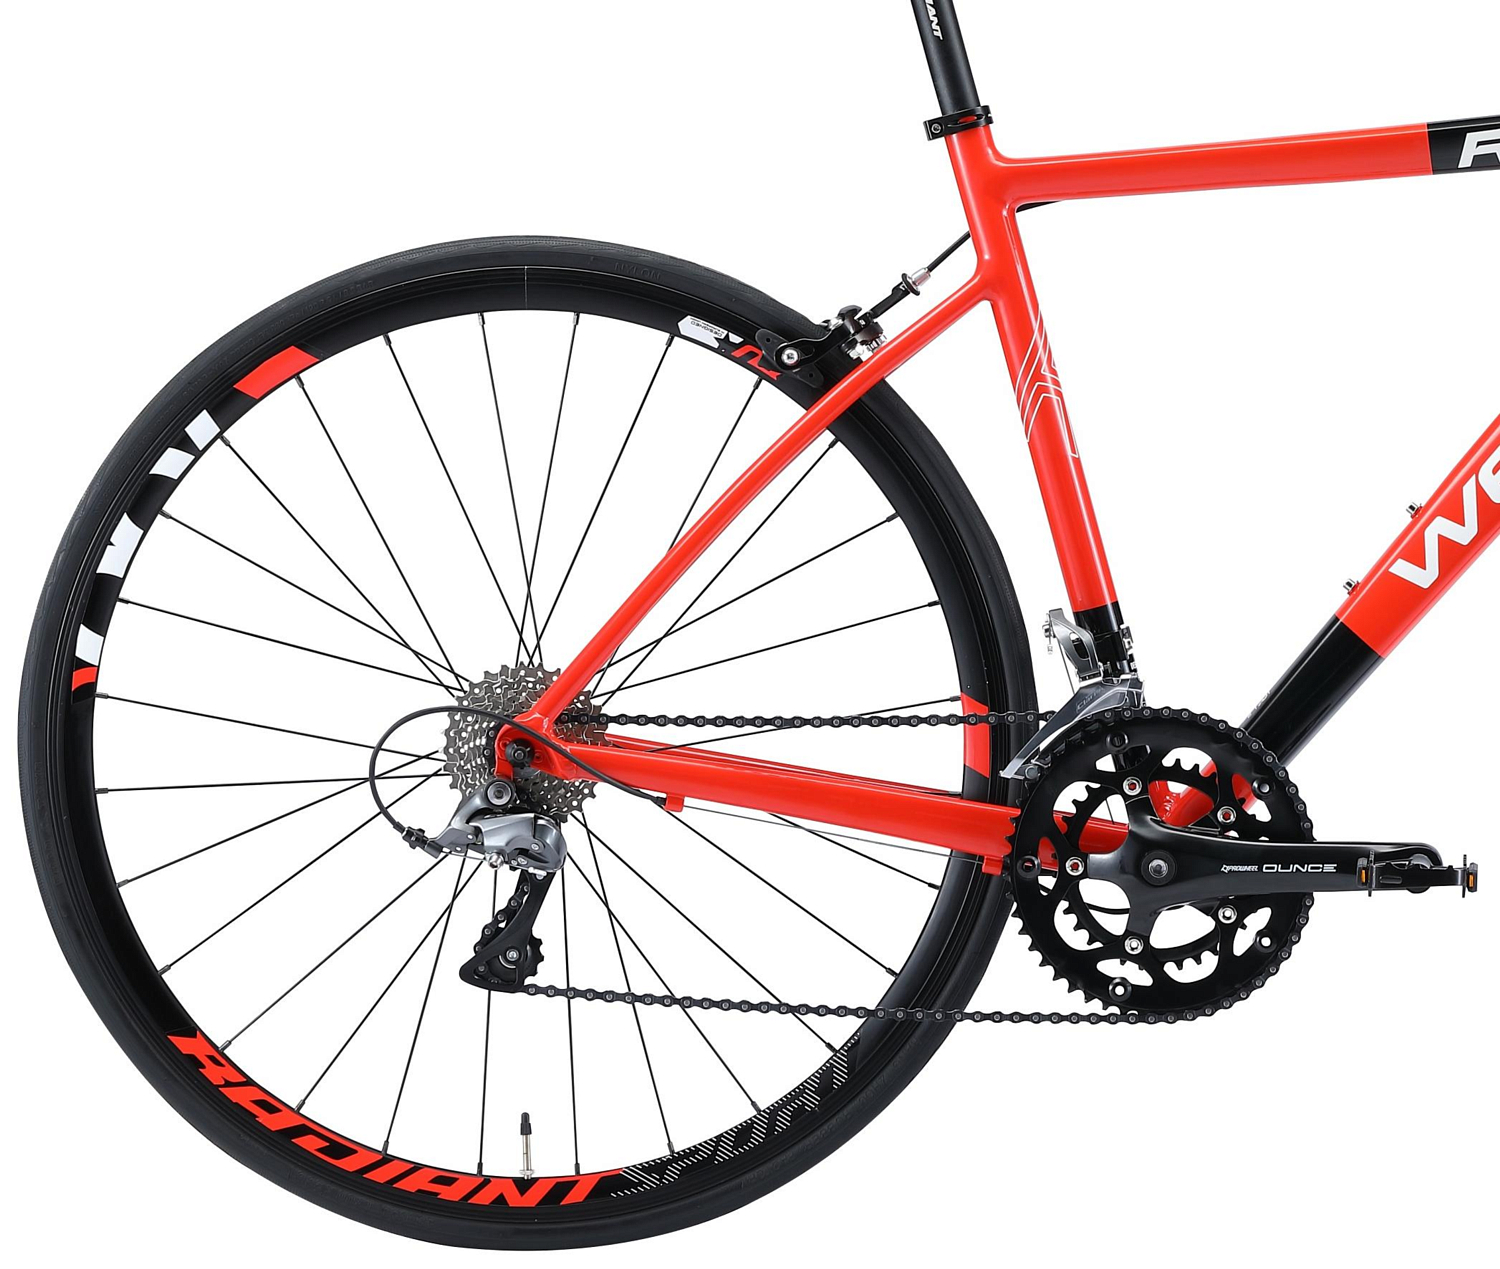 Велосипед Welt R80 2021 Red/black